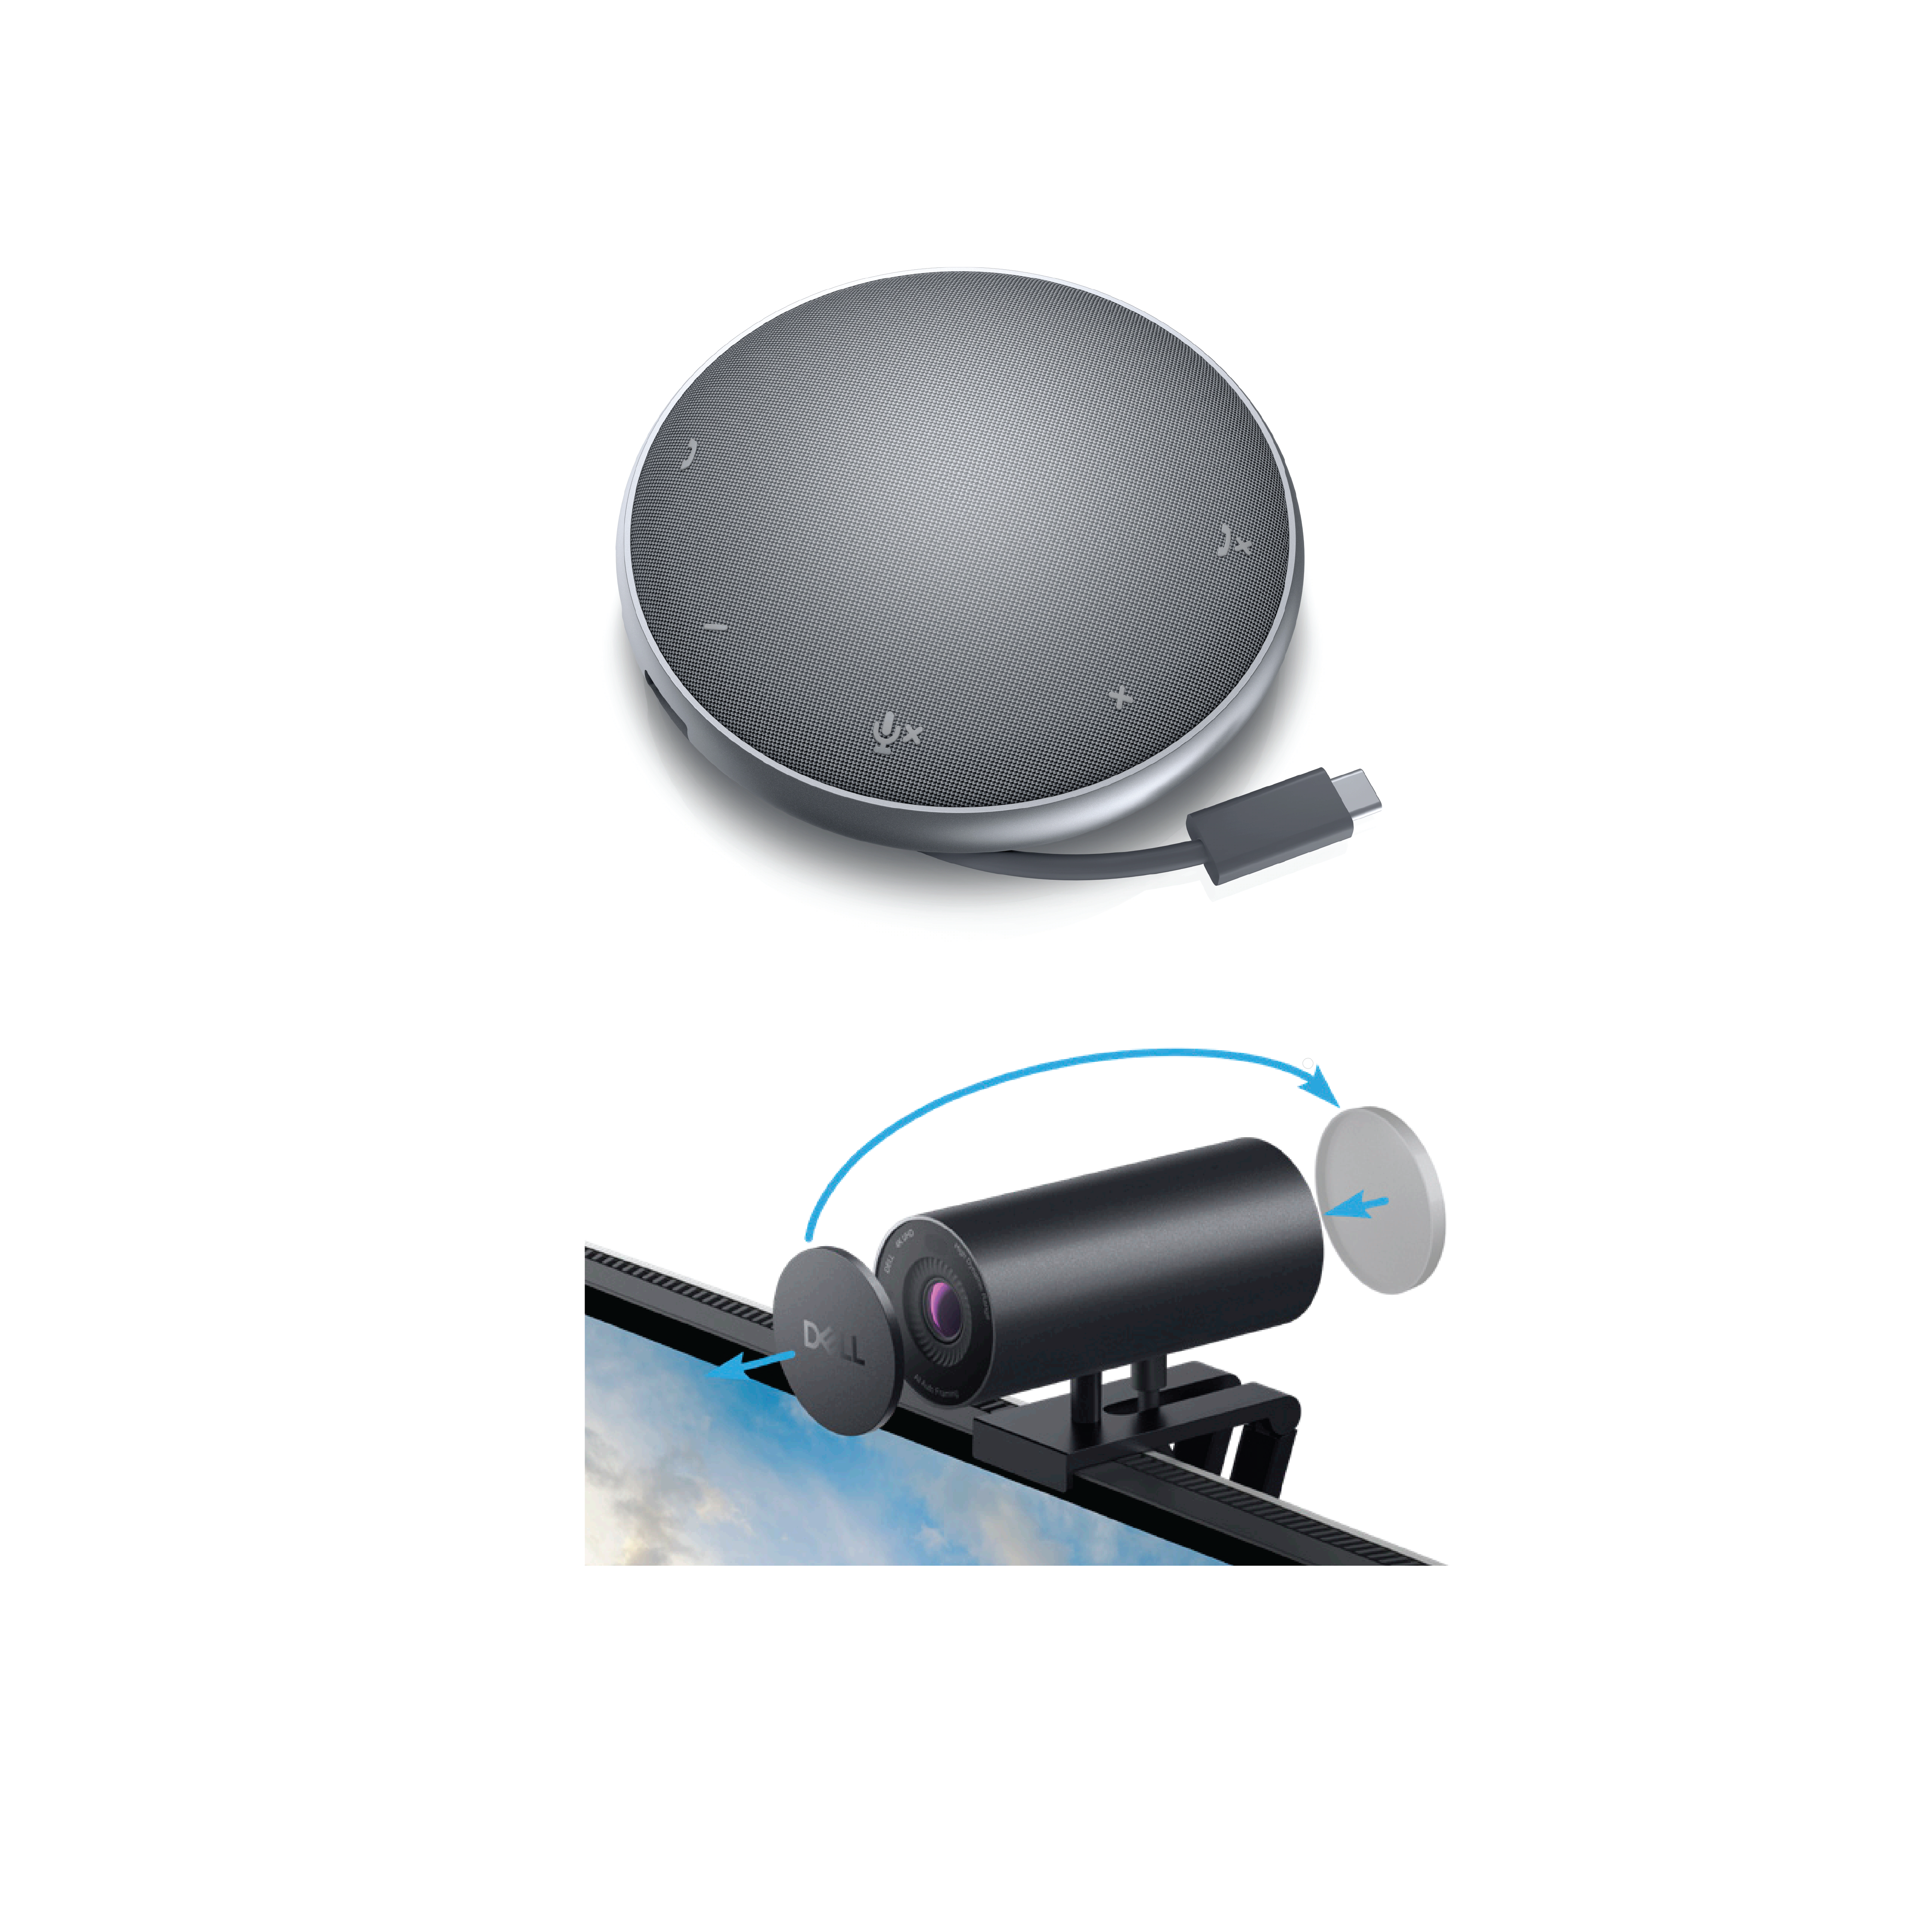 Bundle Dell Mobile Adapter Speakerphone and Dell UltraSharp Webcam